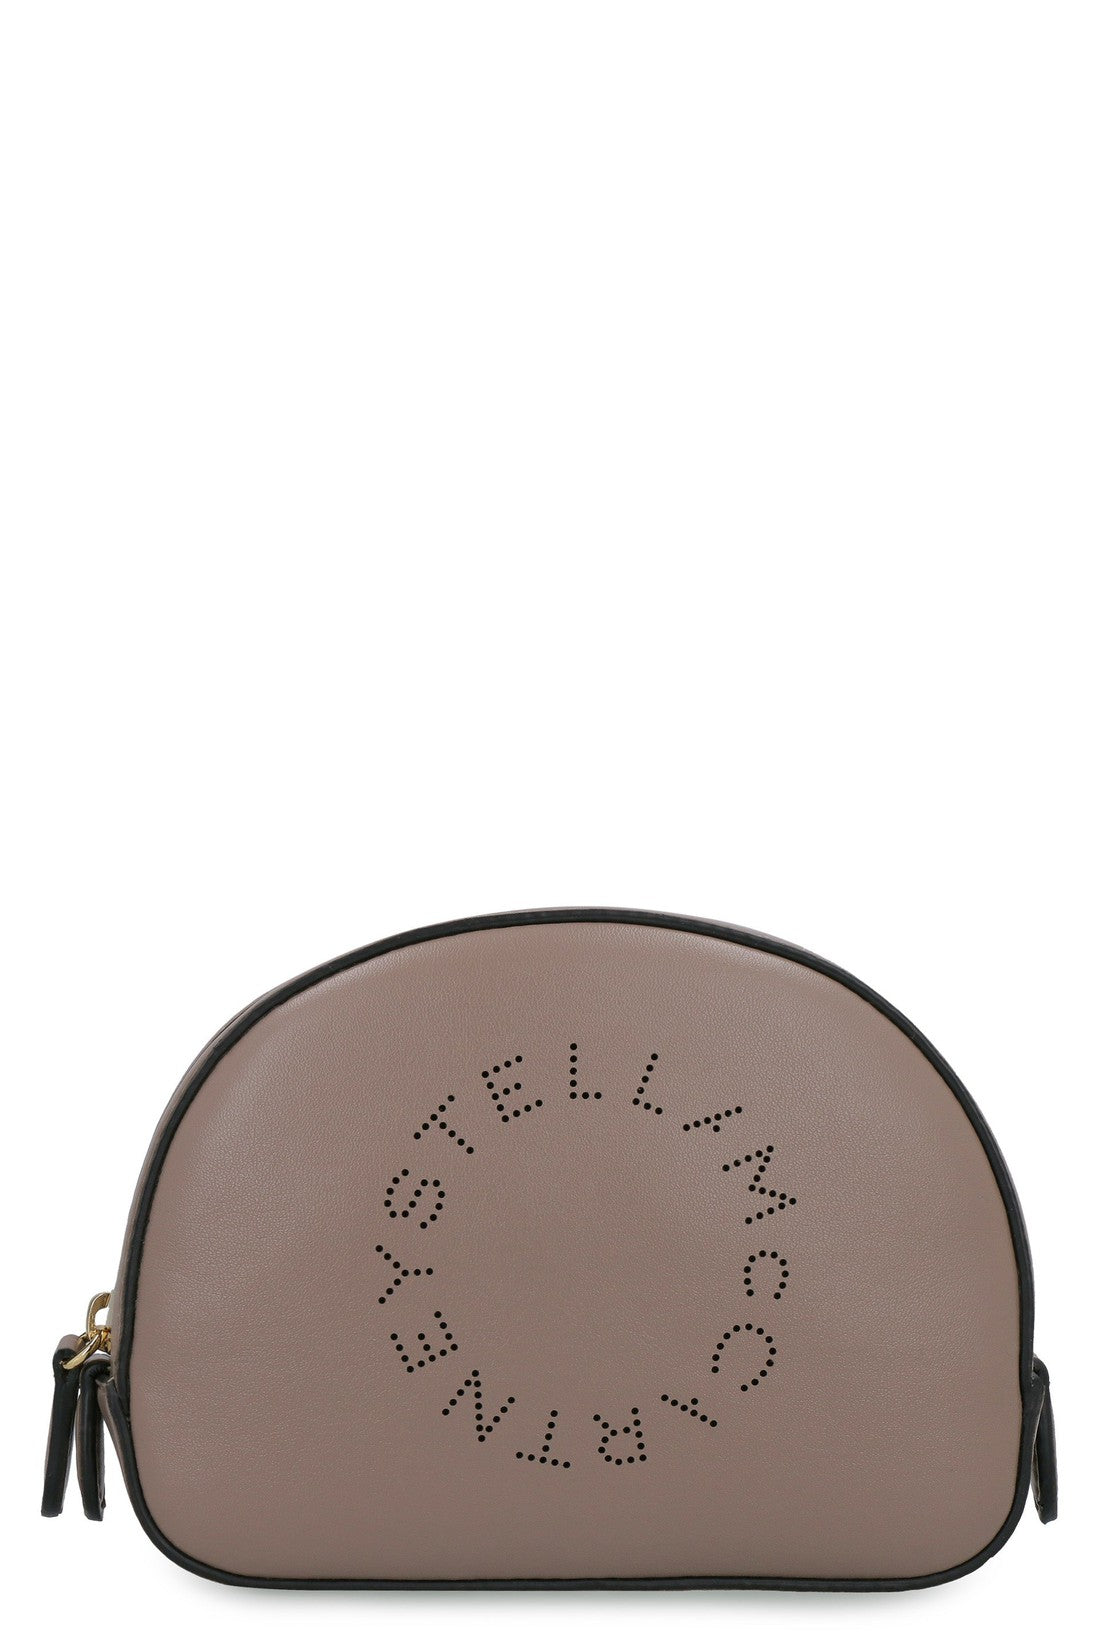 Stella McCartney-OUTLET-SALE-Stella Logo wash bag-ARCHIVIST